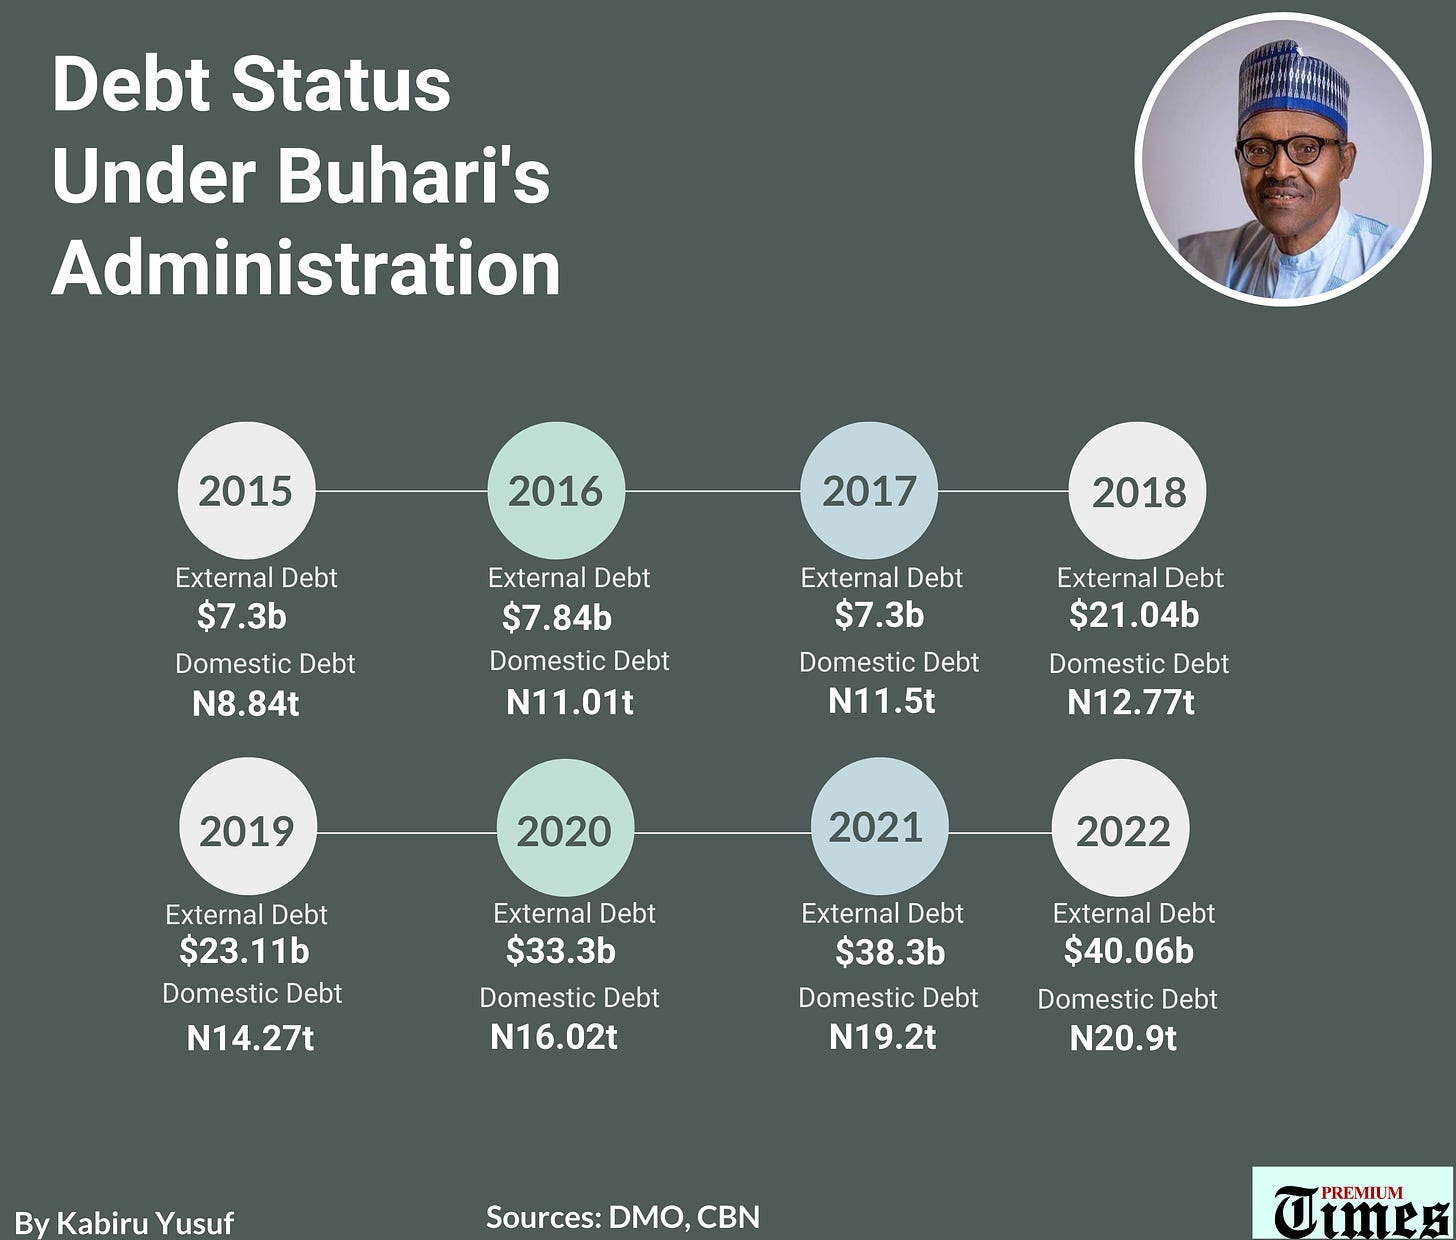 Debt Status under Buhar's Administration